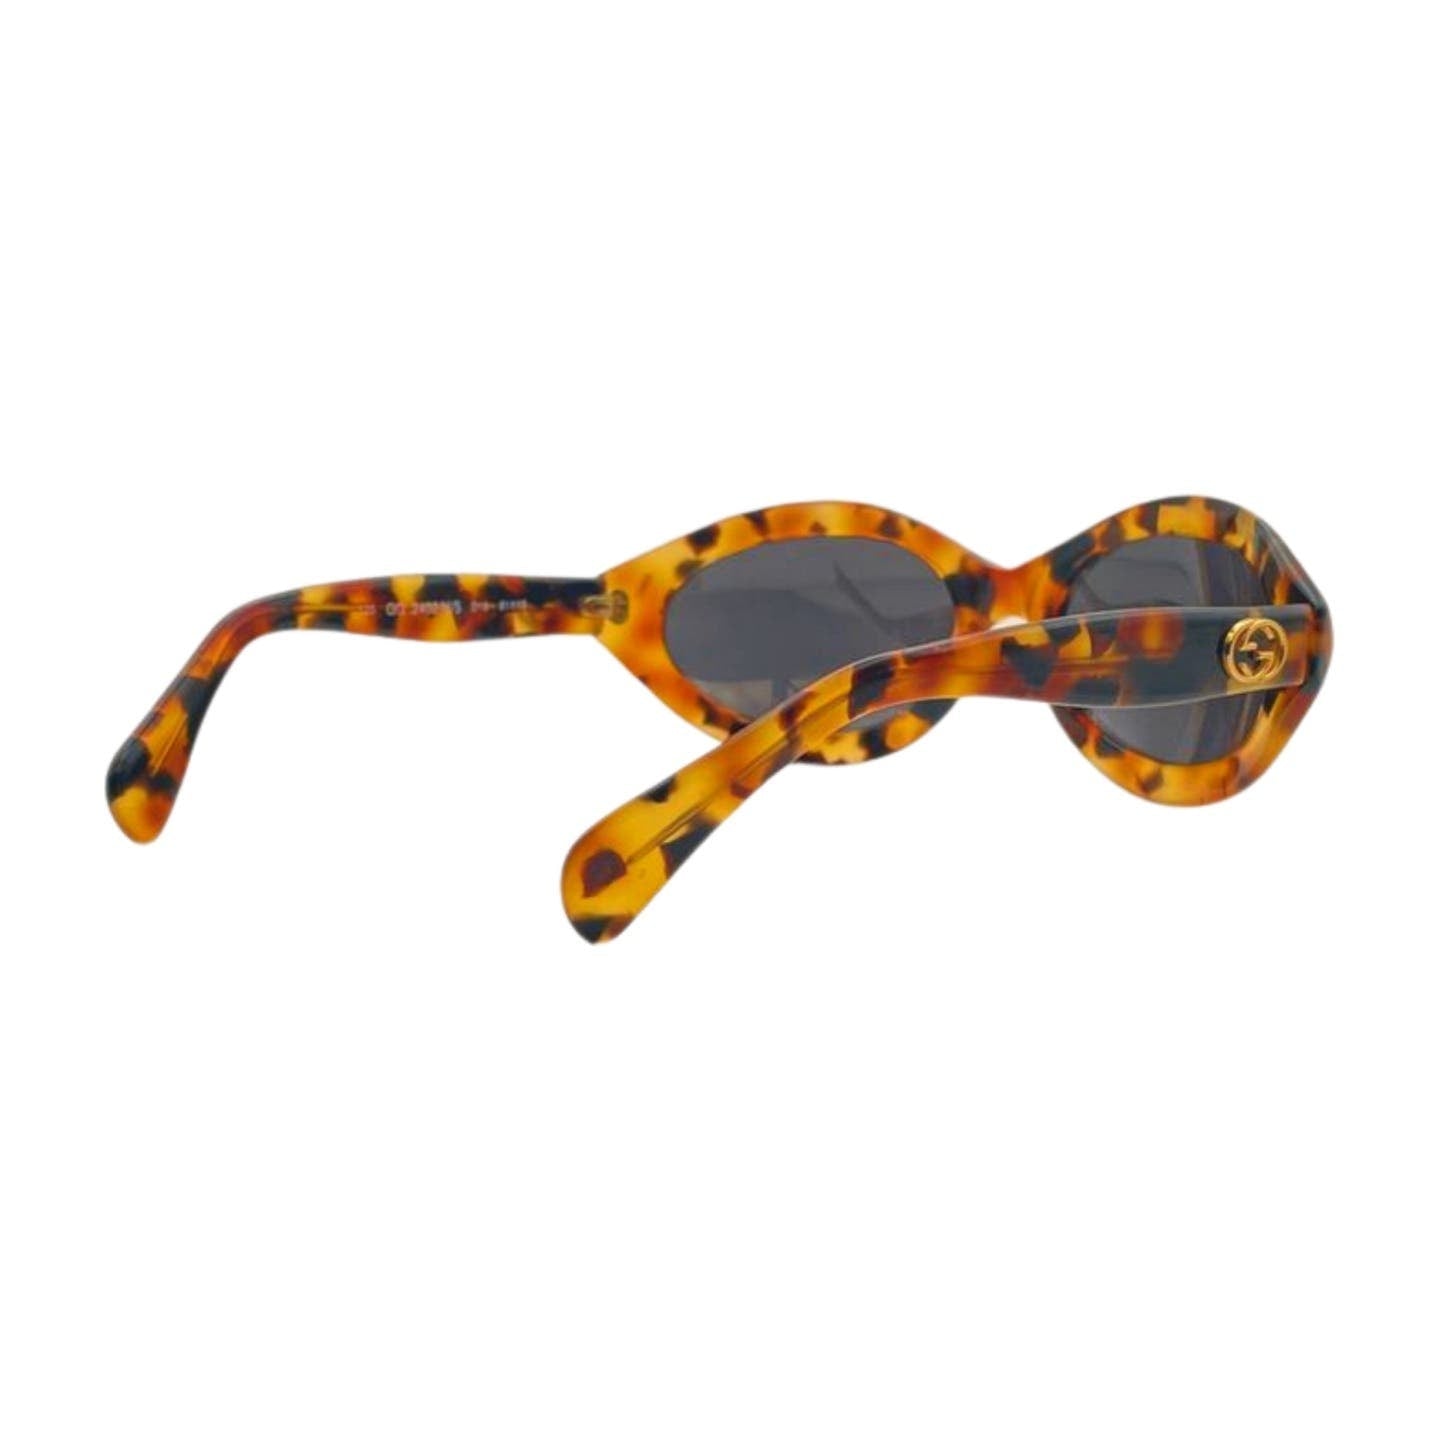 Gucci Tortoise Sunglasses - Le Look